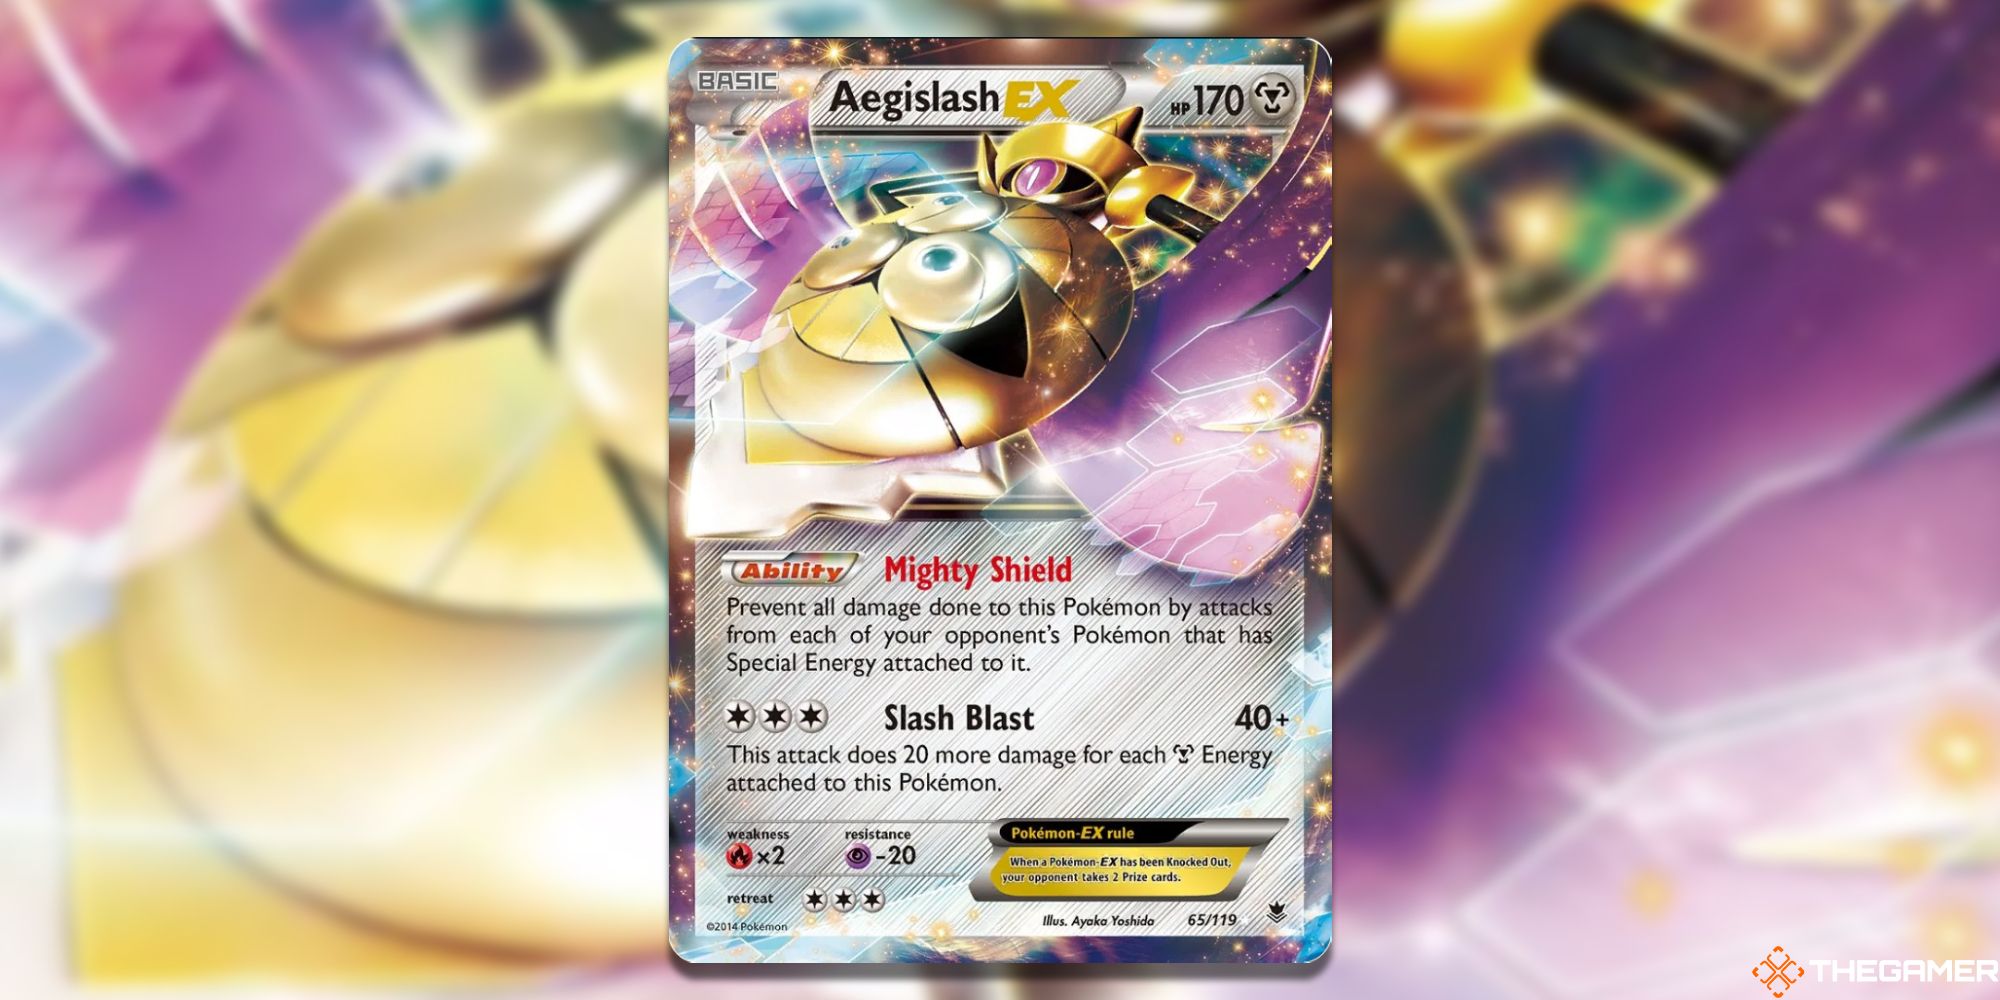 Aegislash-EX from Phantom Forces Card Art with blurred background